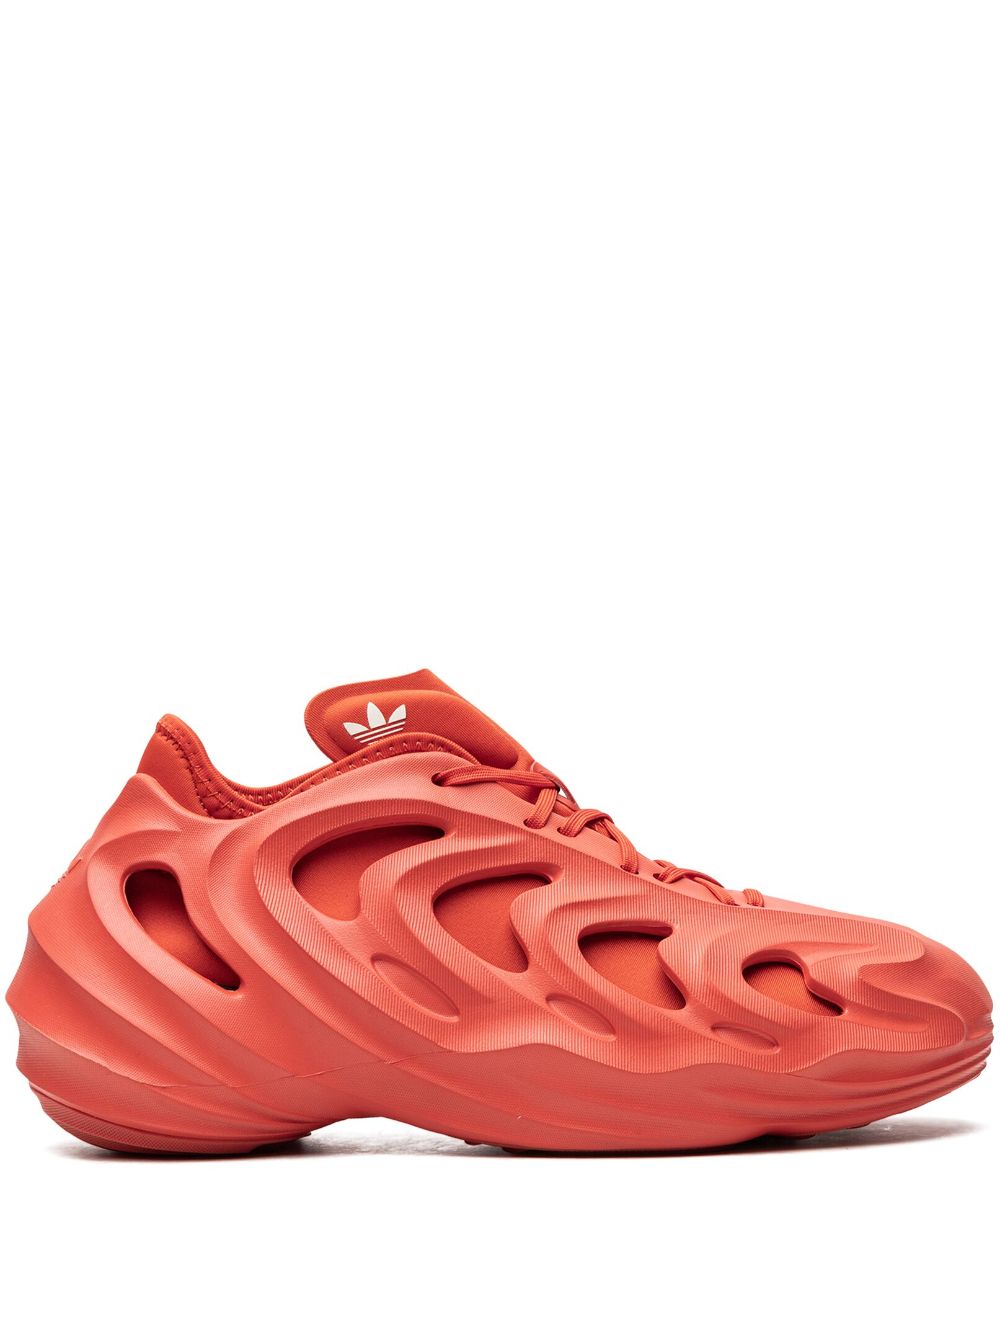 adidas AdiFOM Q sneakers - Red von adidas